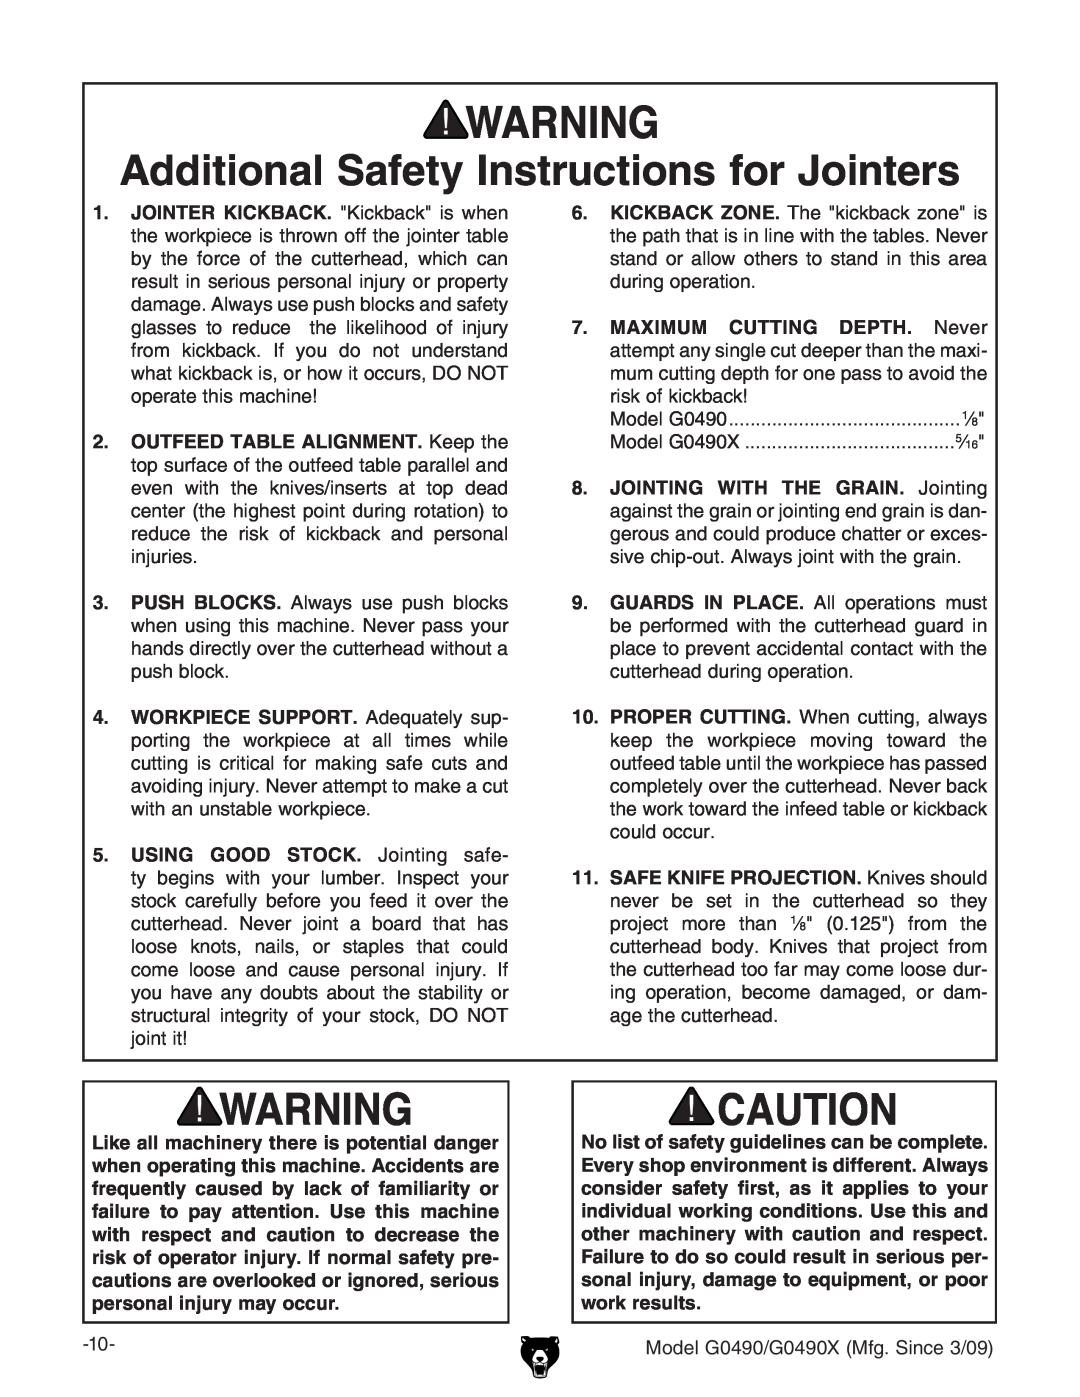 Grizzly G0490 Additional Safety Instructions for Jointers, 6. KICKBACK ZONE.IZ`X`WVX`odcZh, Yjgc\deZgVidc# 